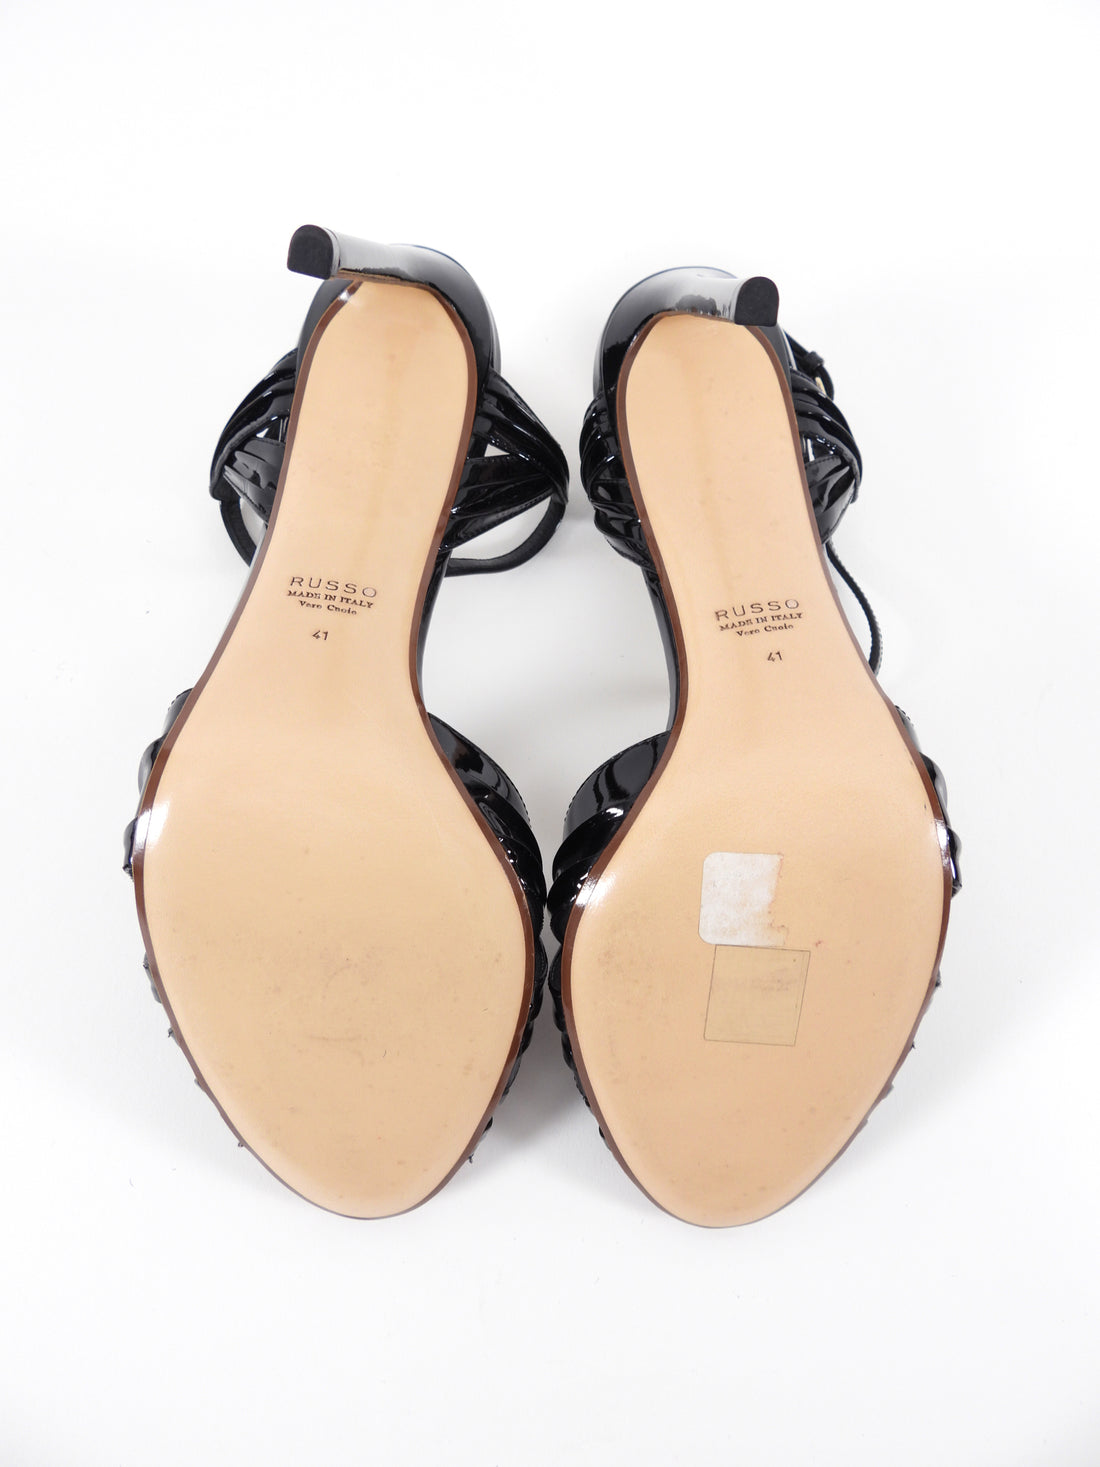 Francesco Russo Black Patent Strappy Sandals Heels - 41